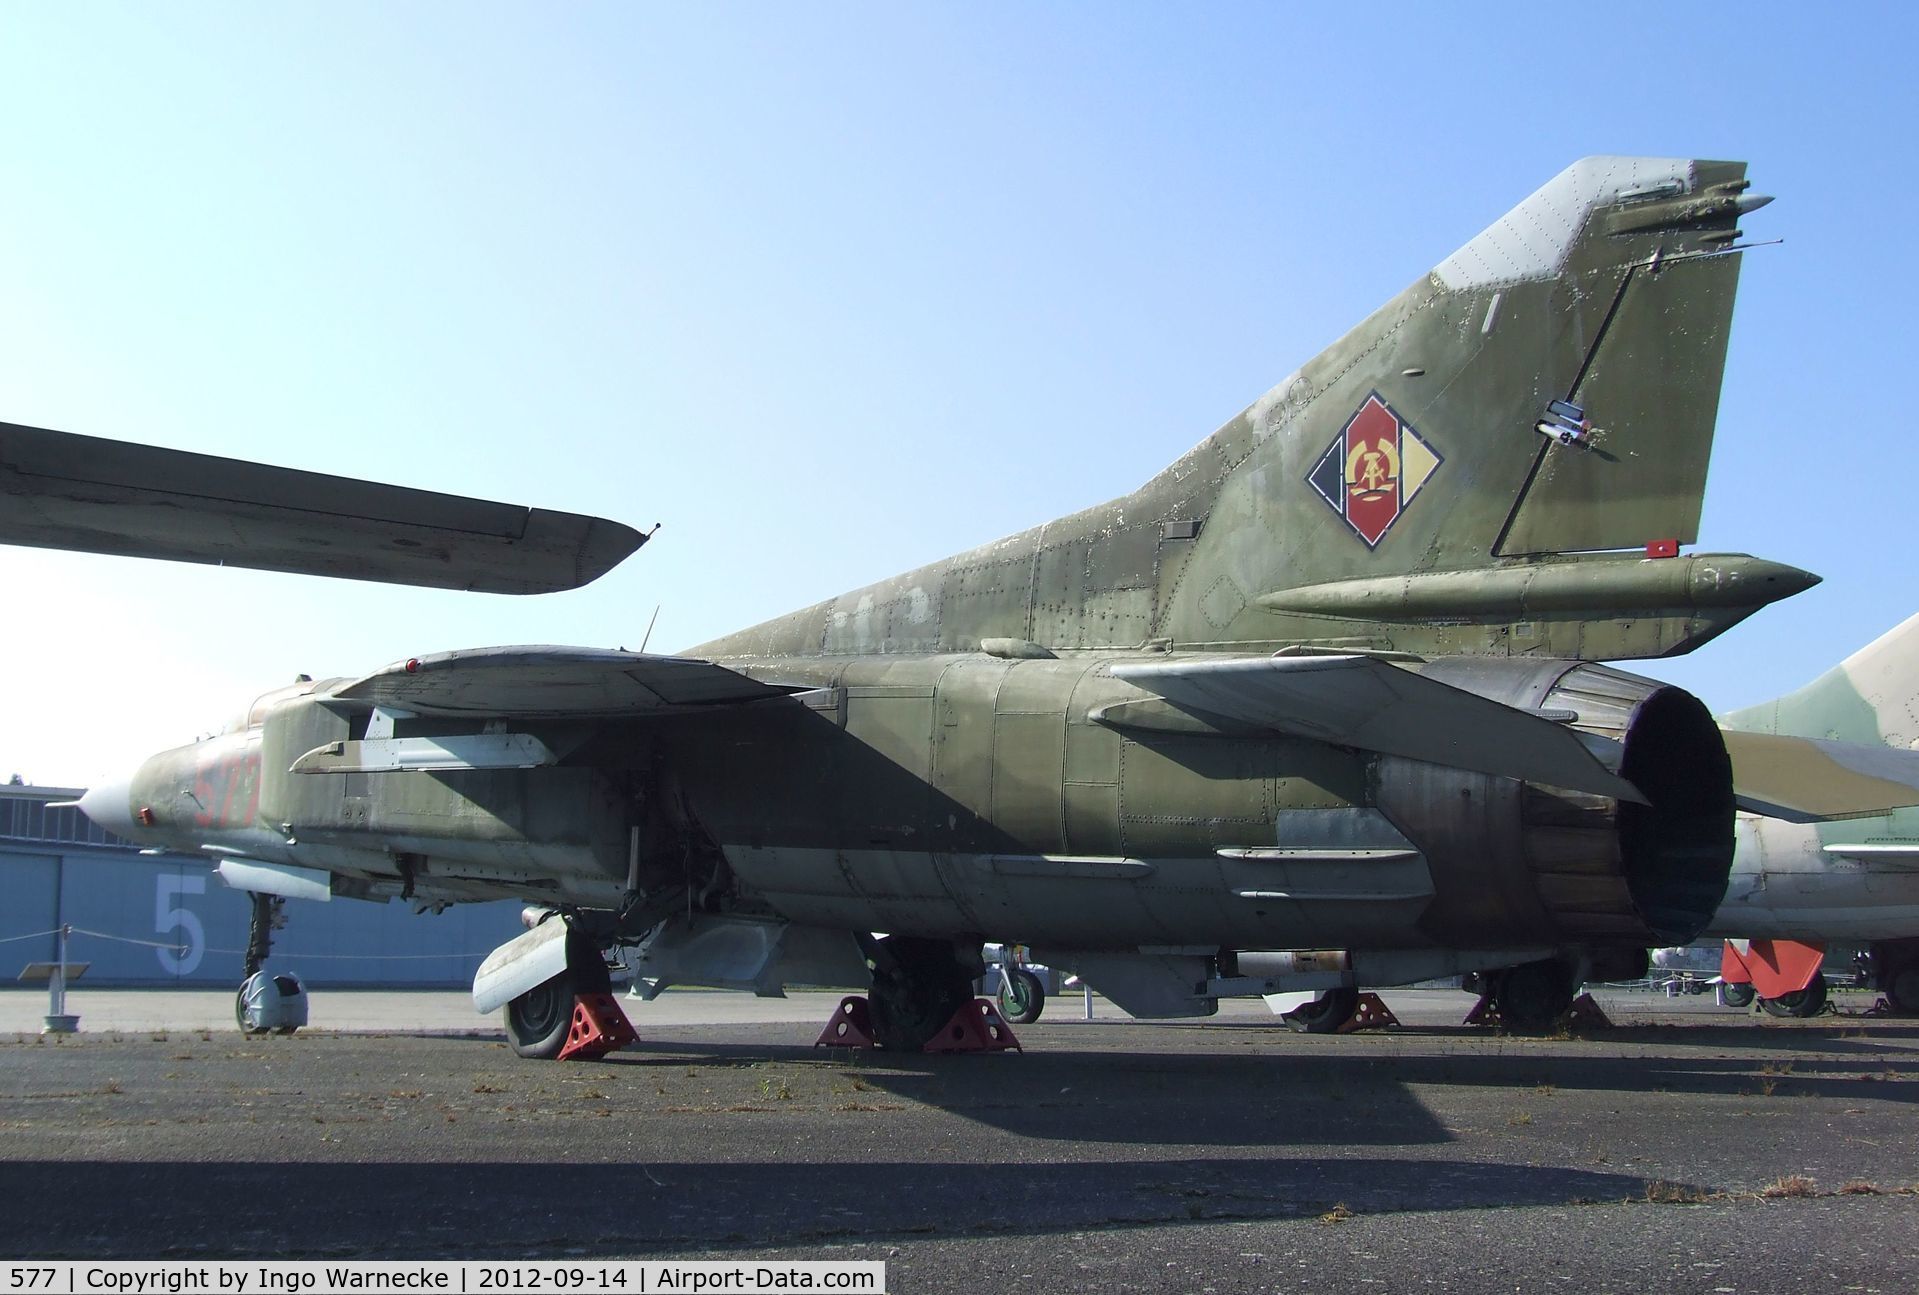 577, Mikoyan-Gurevich MiG-23MF C/N 0390213299, Mikoyan i Gurevich MiG-23MF FLOGGER-B at the Luftwaffenmuseum, Berlin-Gatow